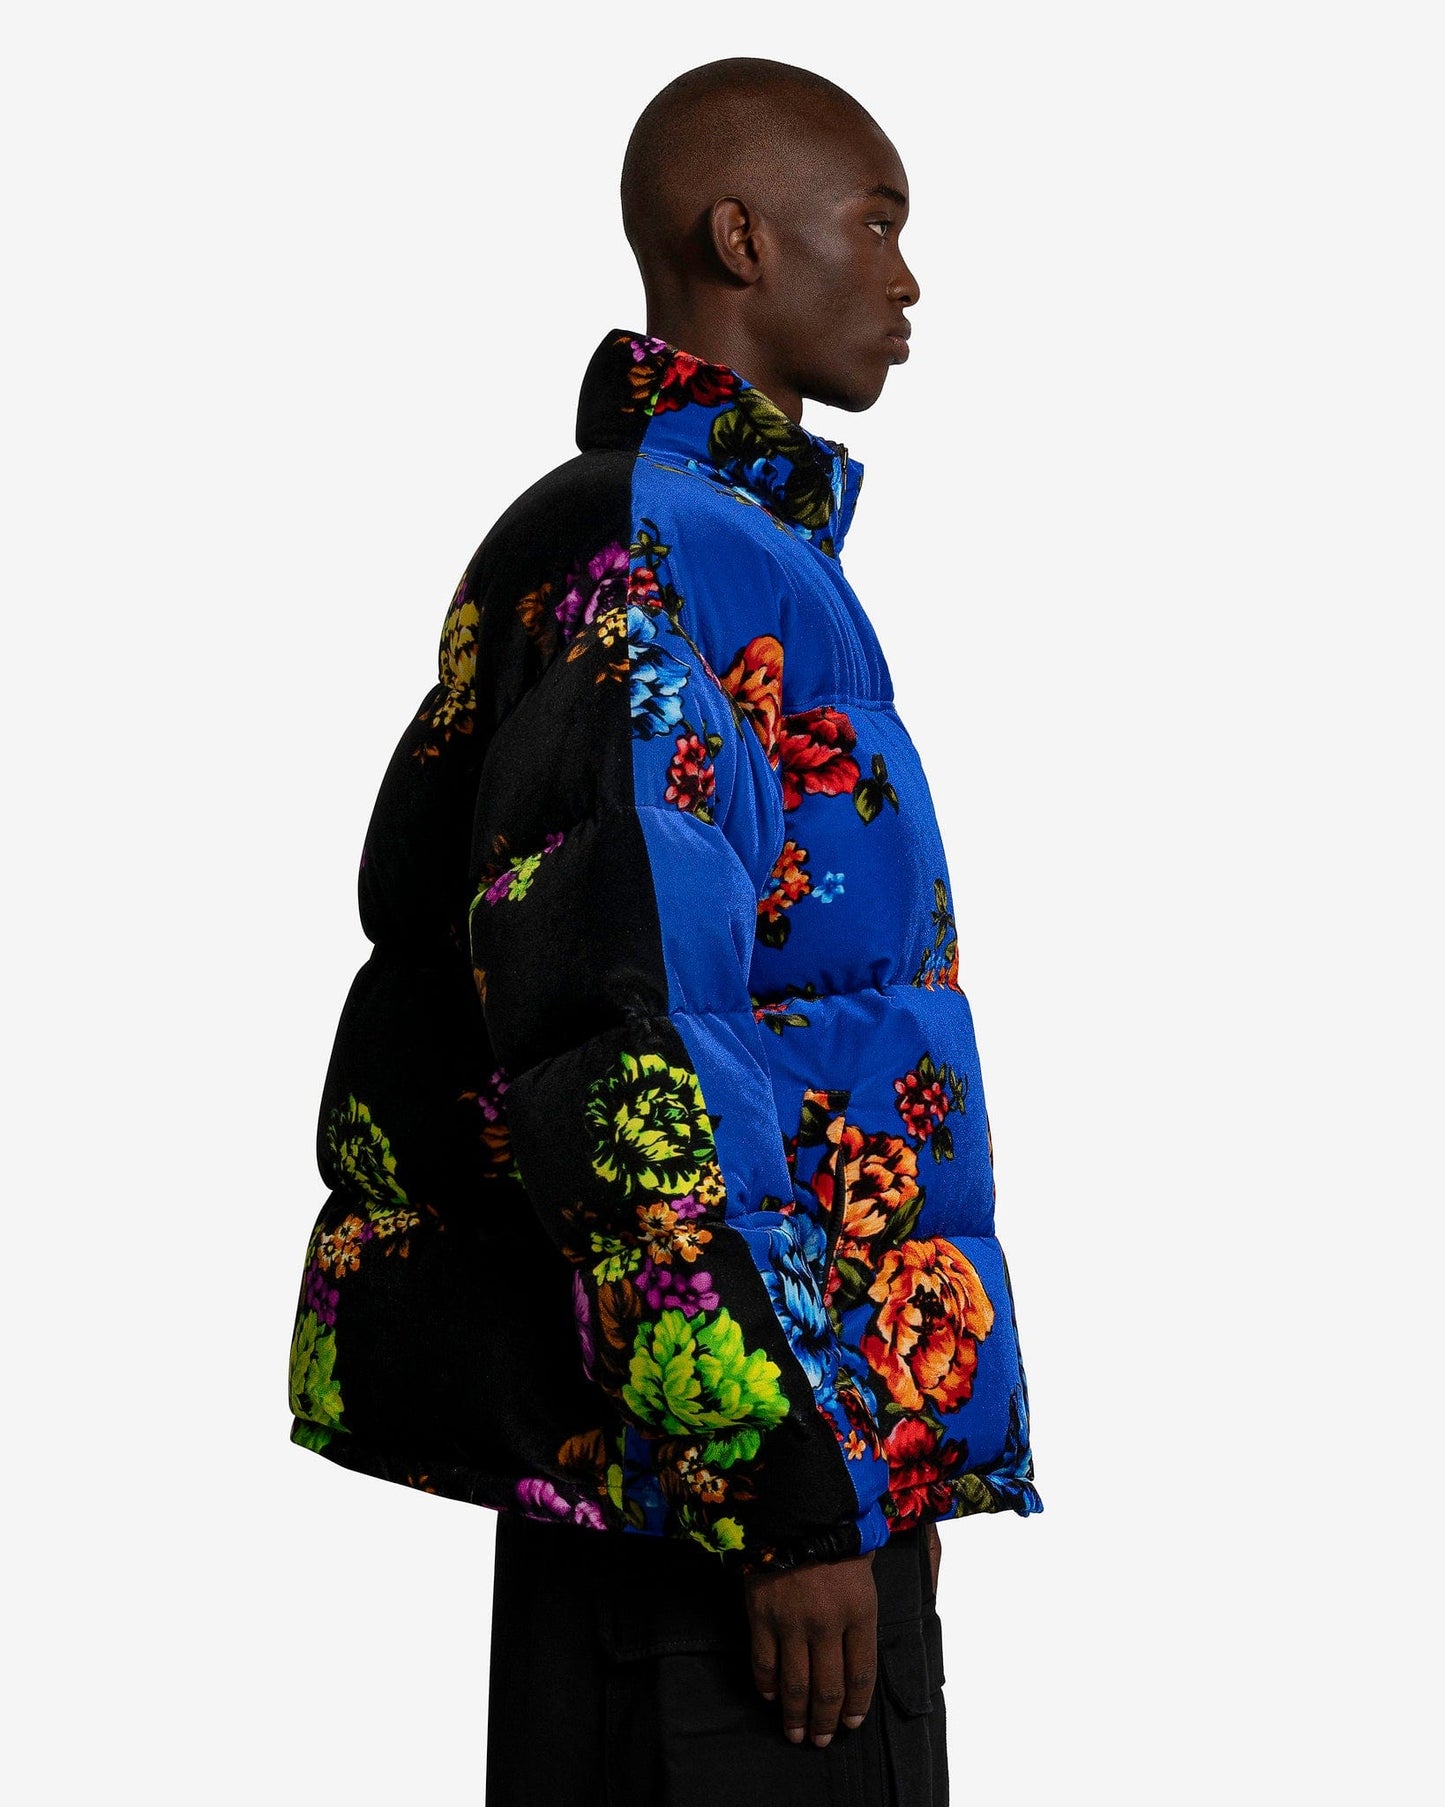 VETEMENTS Men's Jackets Velvet Flower Puffer Jacket in Floral